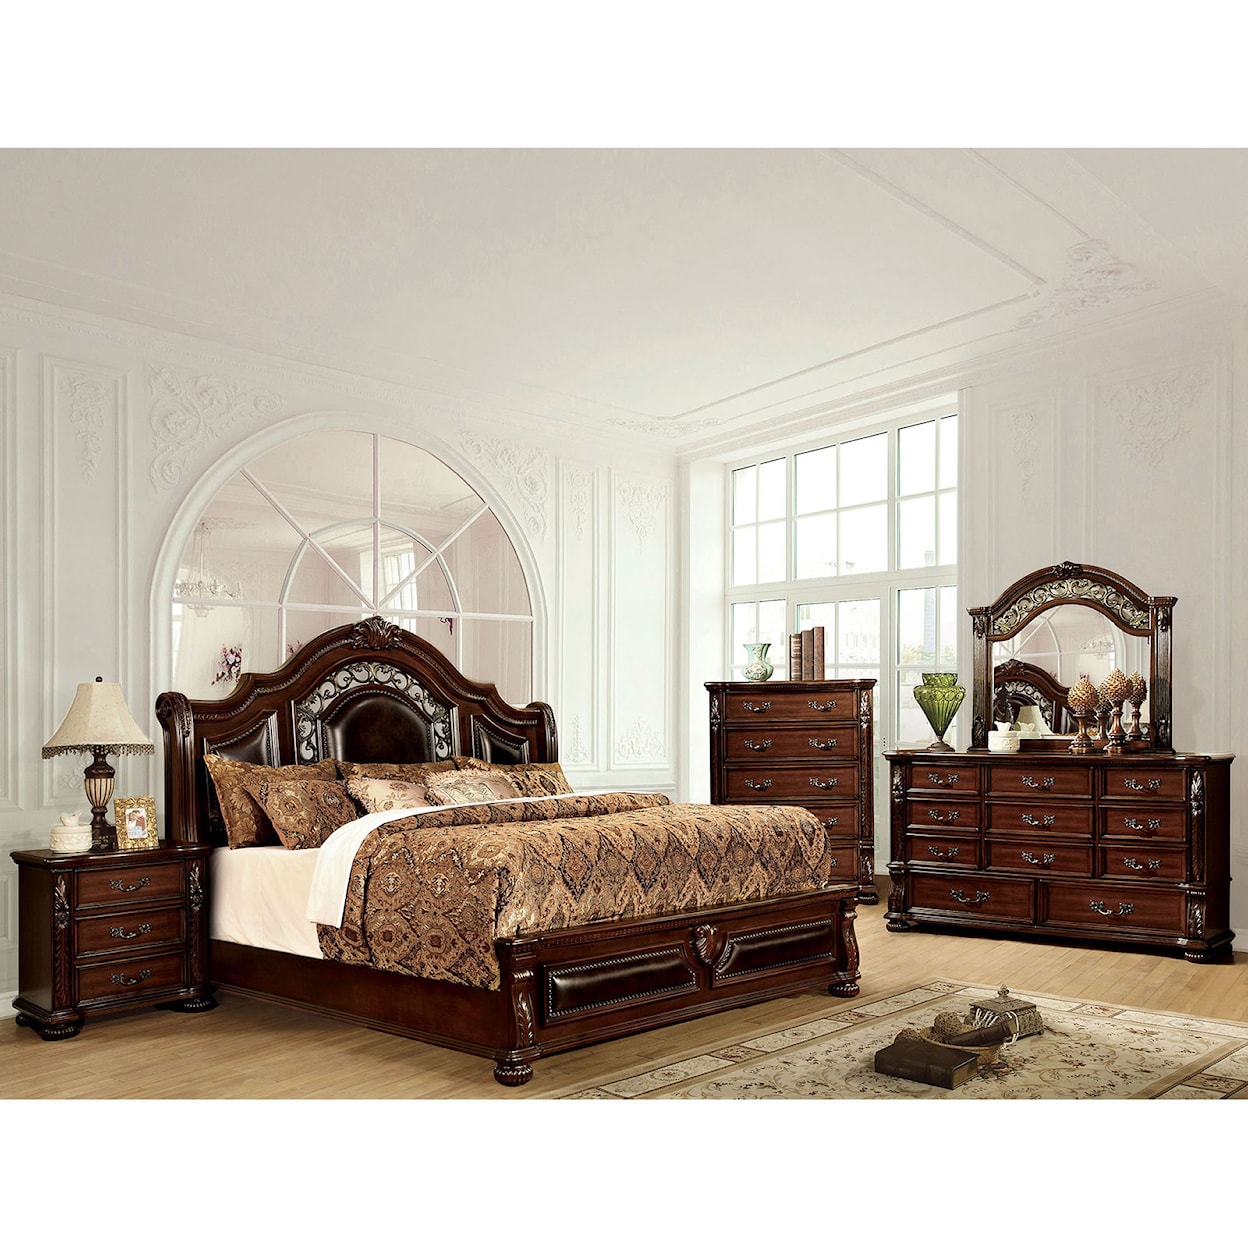 Furniture of America Flandreau Queen Bedroom Set